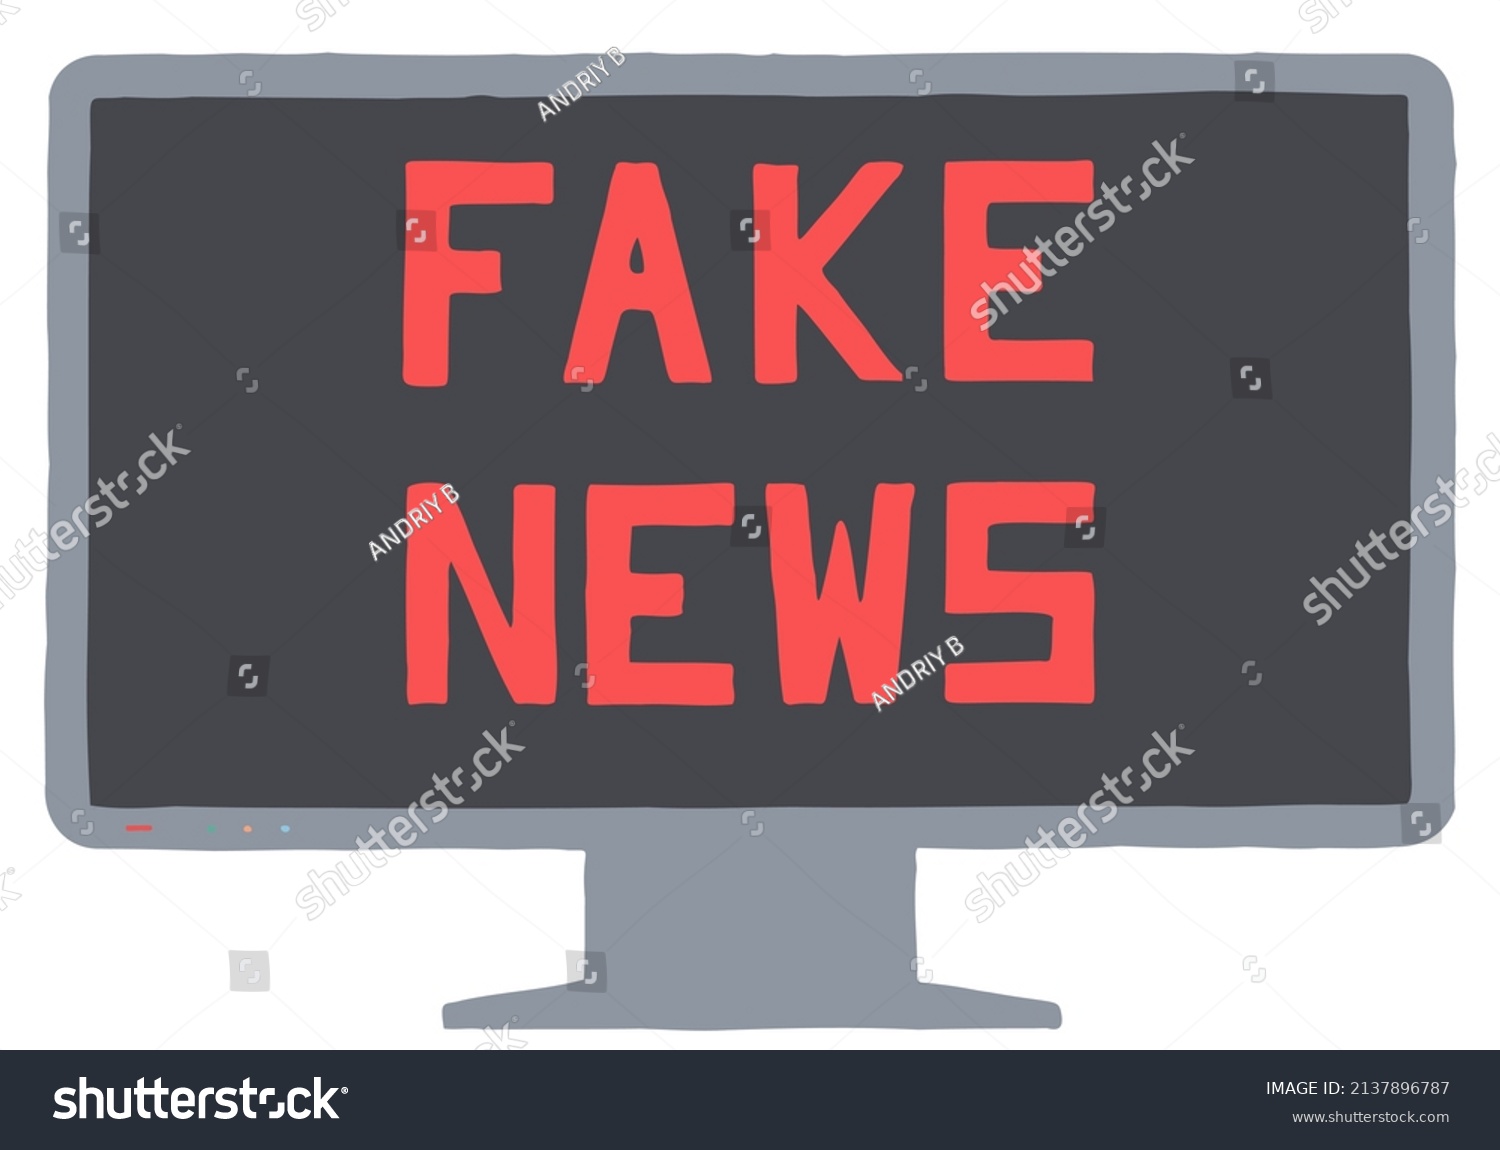 Fake News On Black Tv Screen Stock Vector (Royalty Free) 2137896787